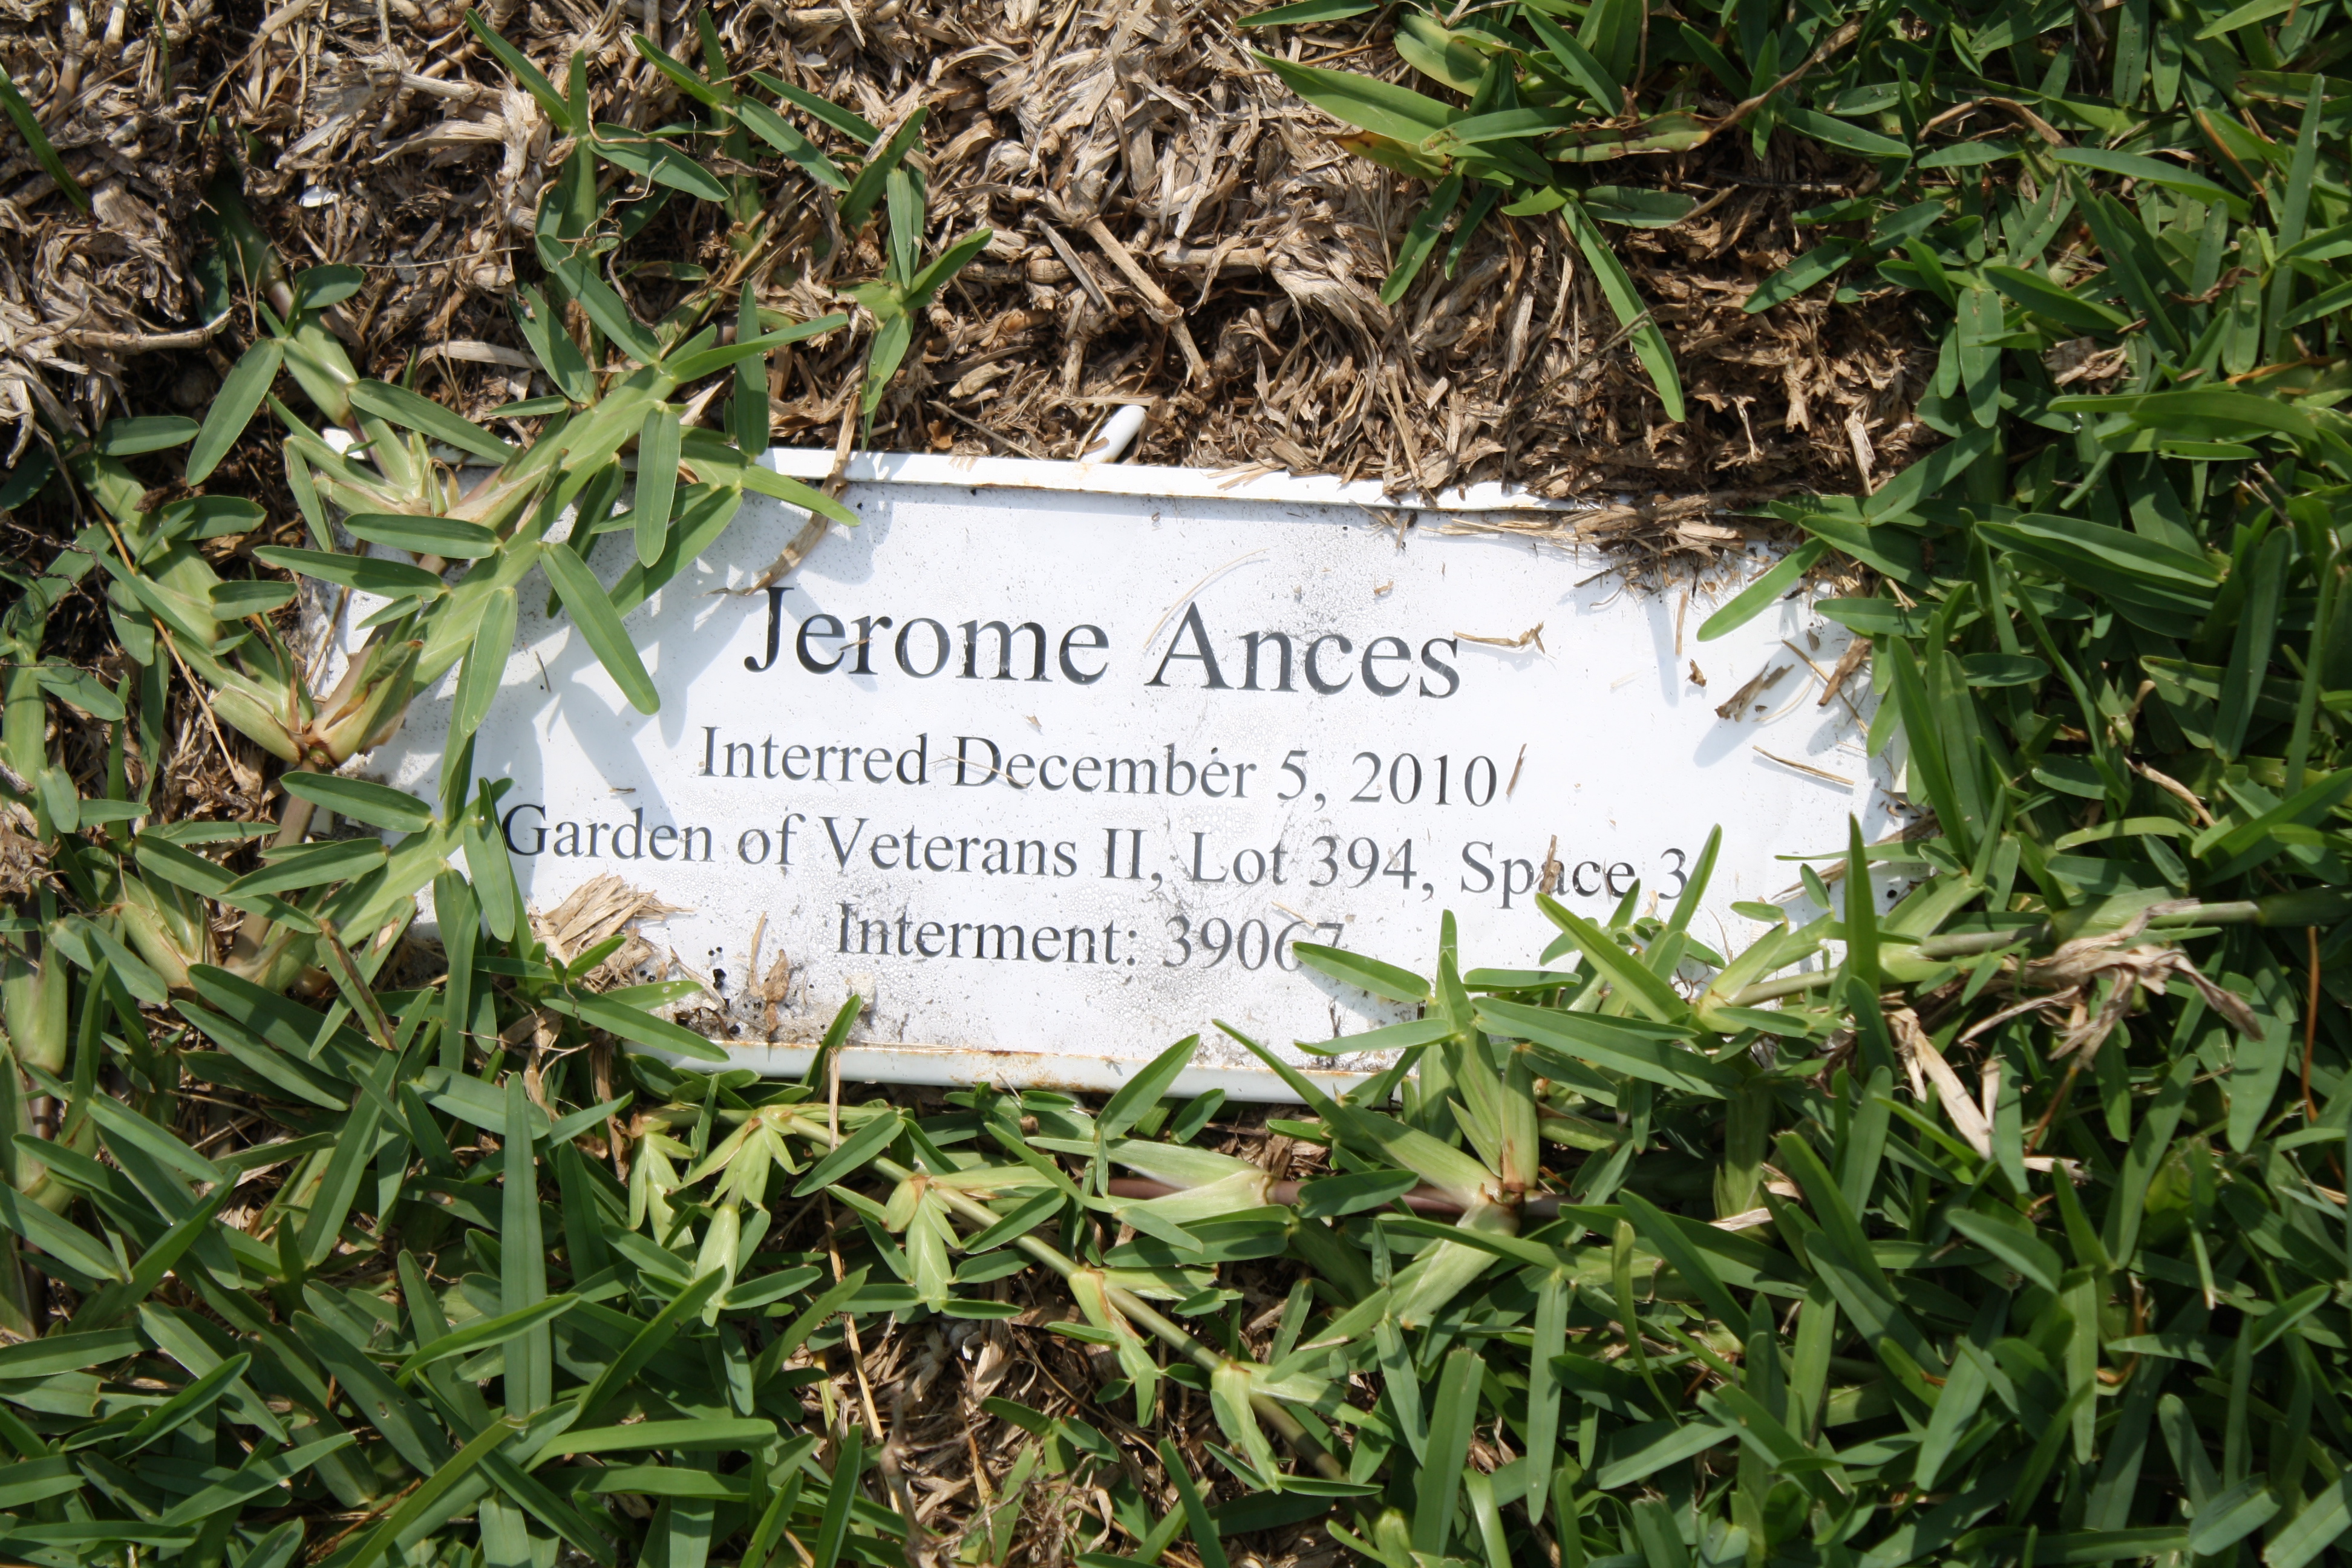 Jerome Ances